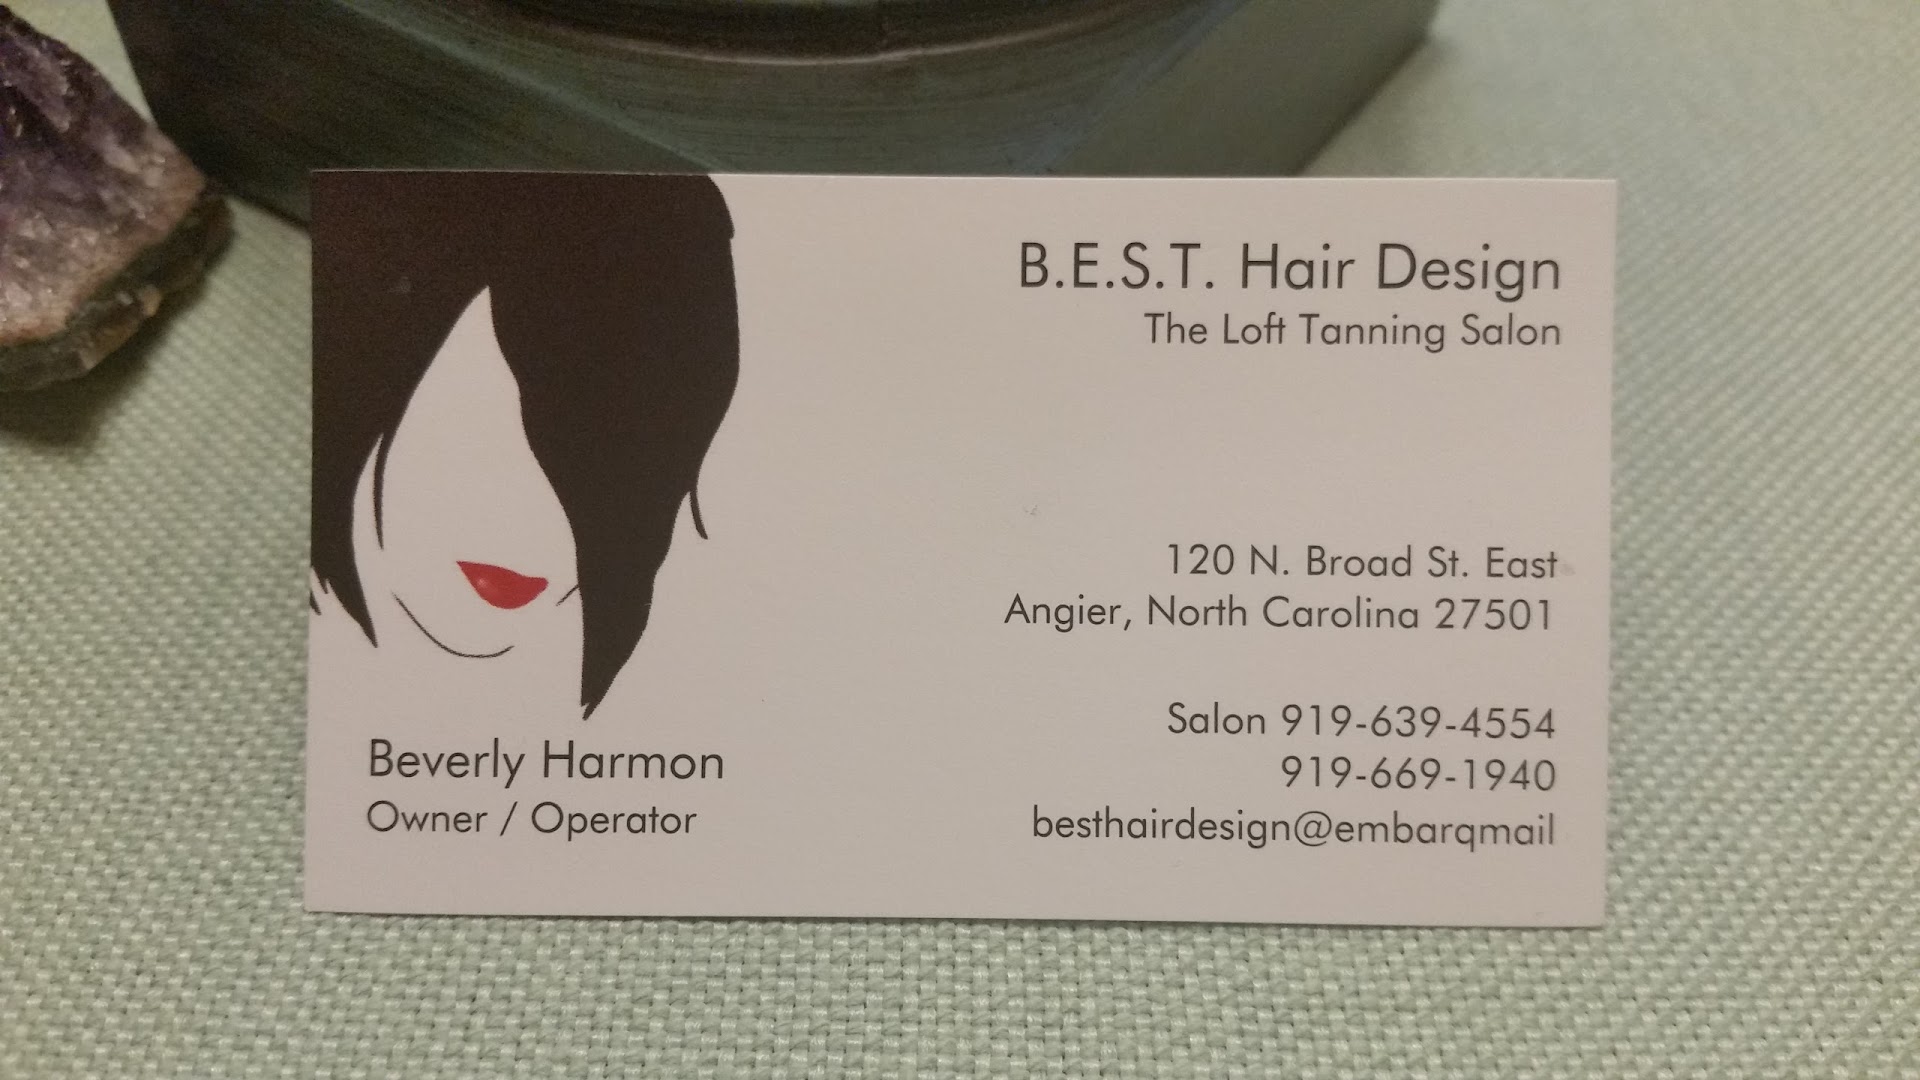 B.E.S.T. Hair Design & The Loft Tanning